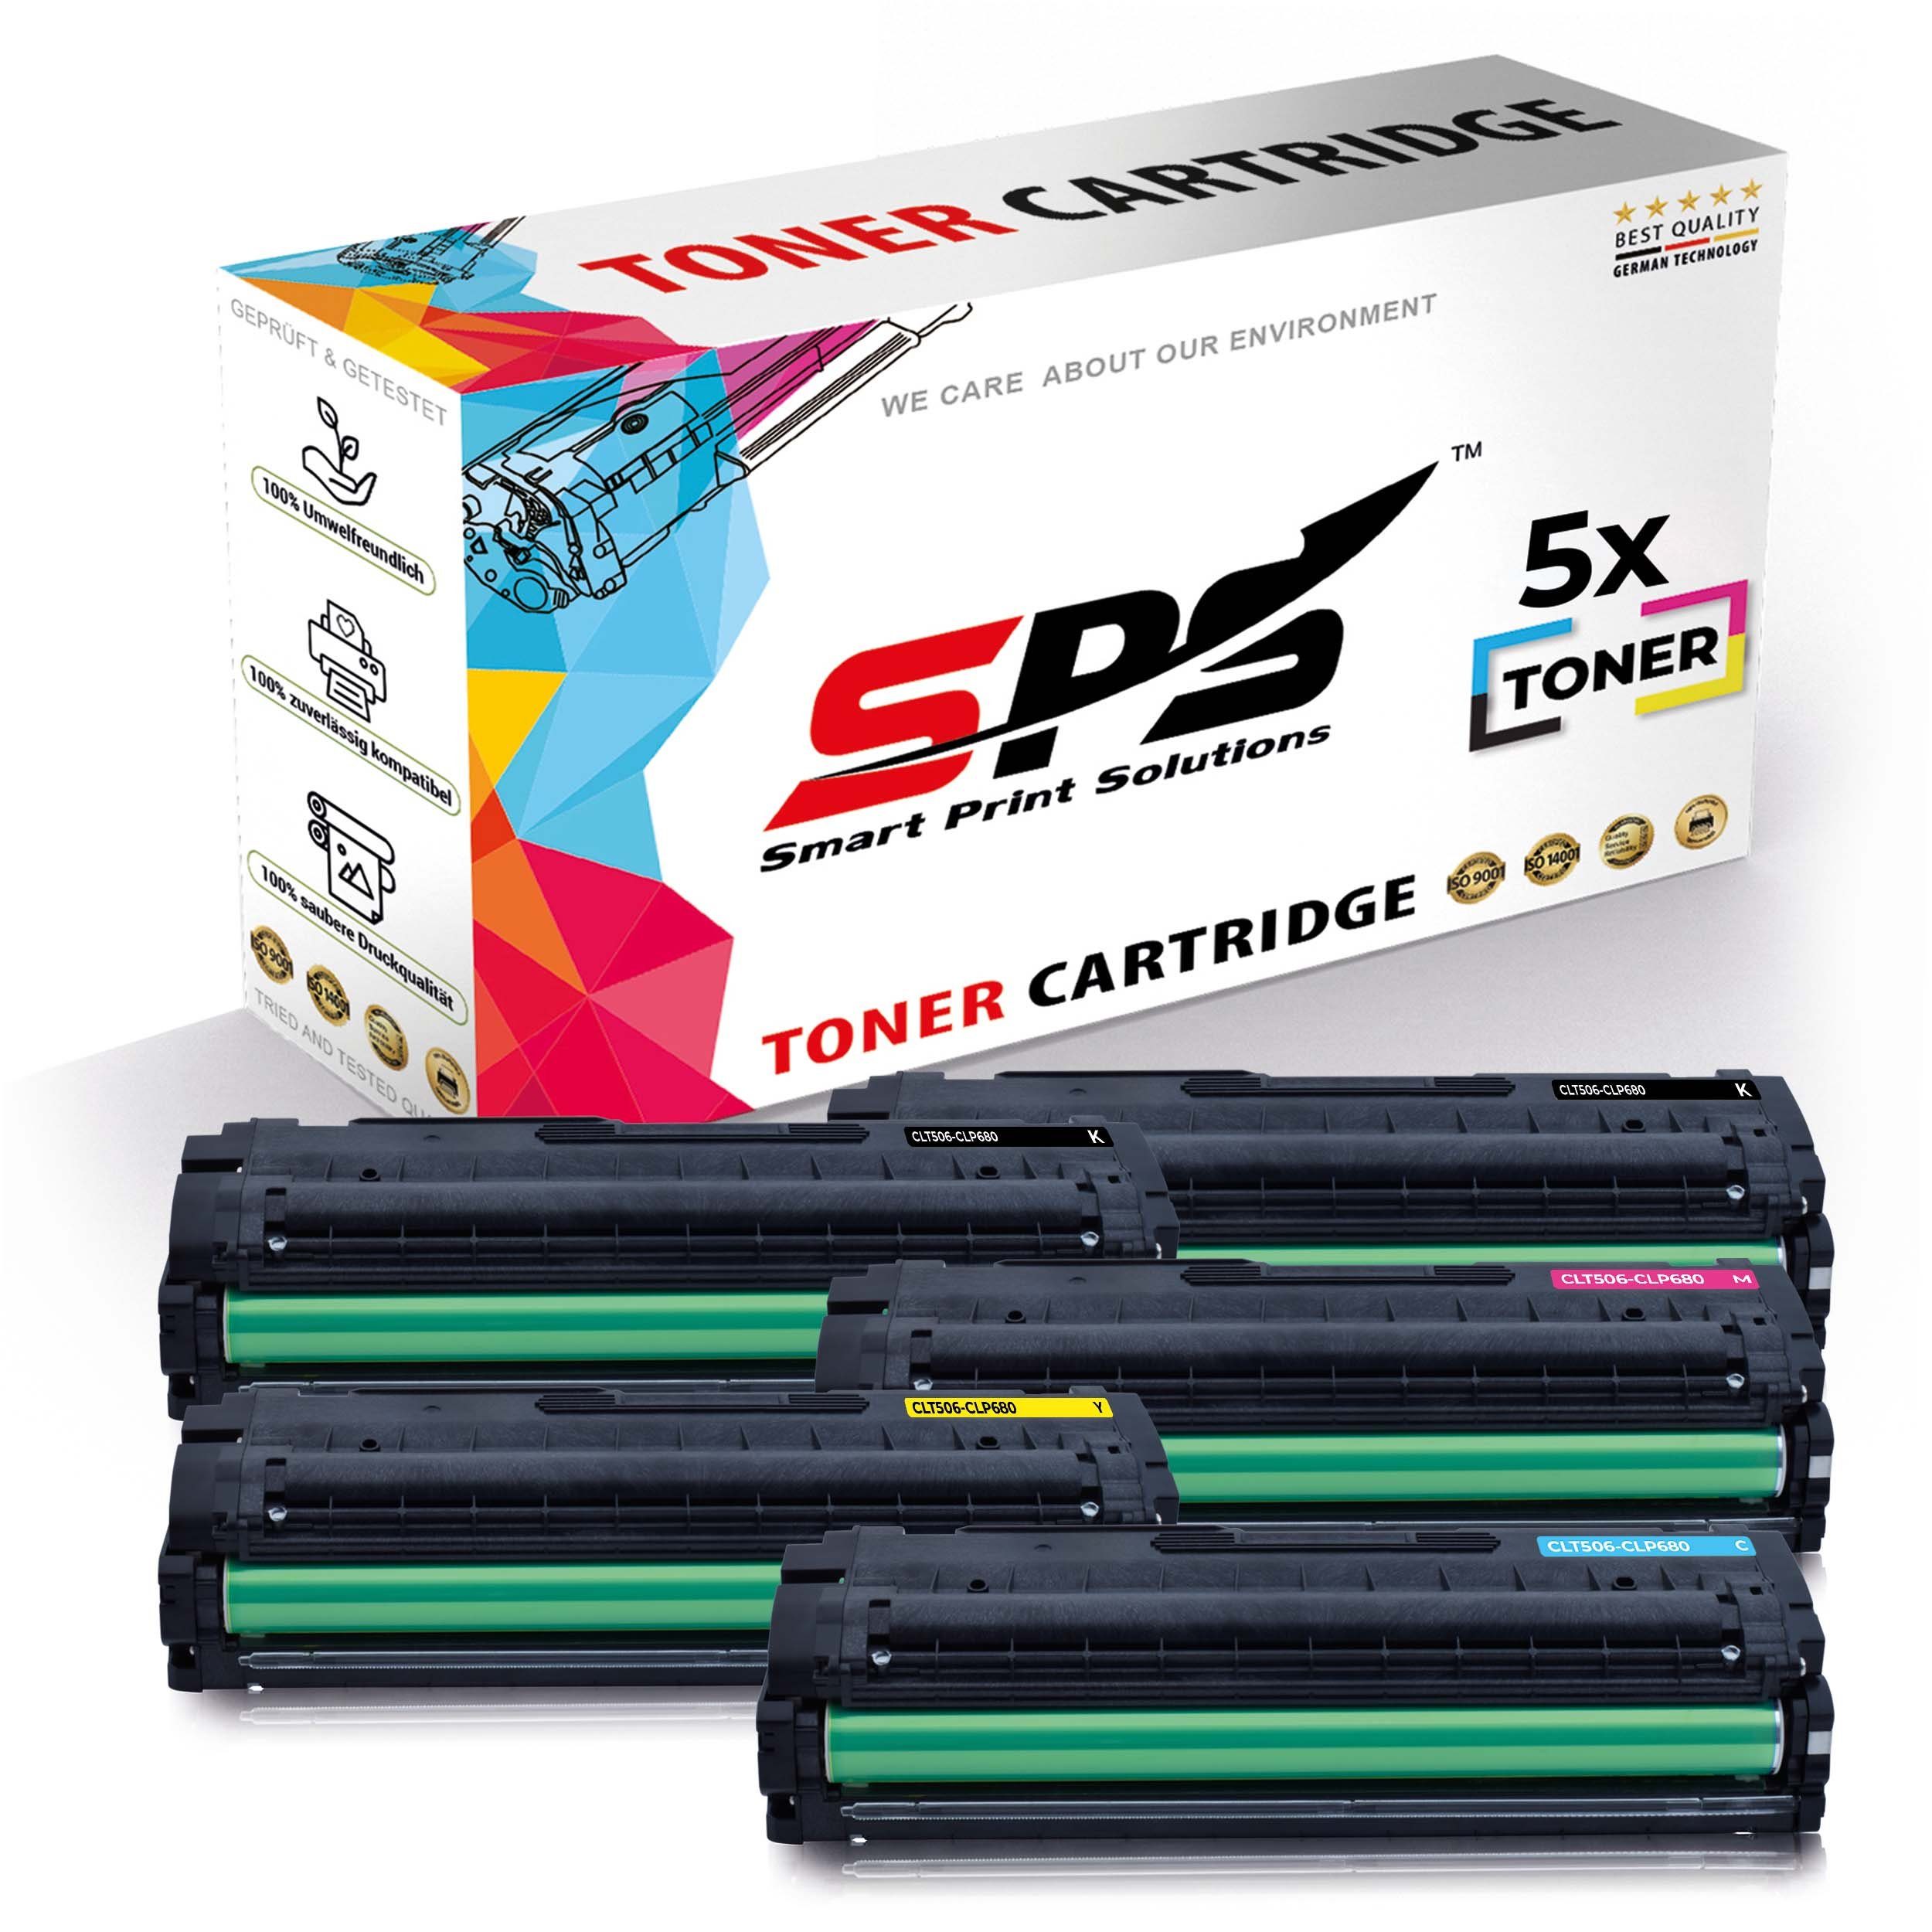 SPS Tonerkartusche 5x Multipack Set Kompatibel für Samsung CLX-6260, (5er Pack, 5x Toner)